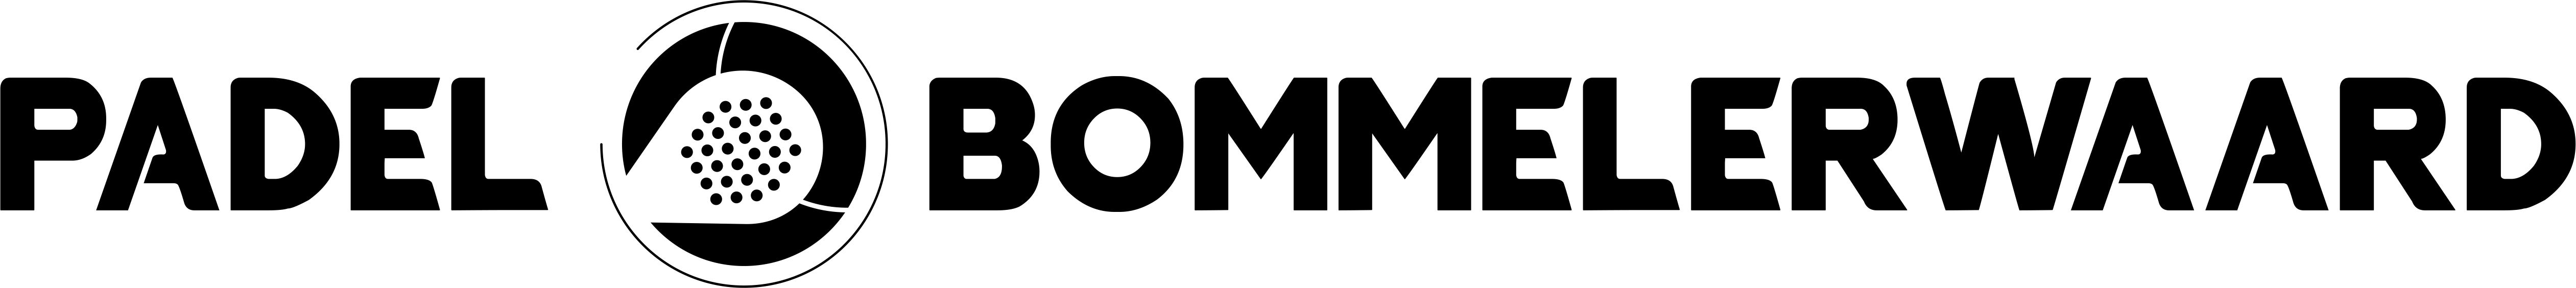 Langgerekt logo van Padel Bommelerwaard zwart.